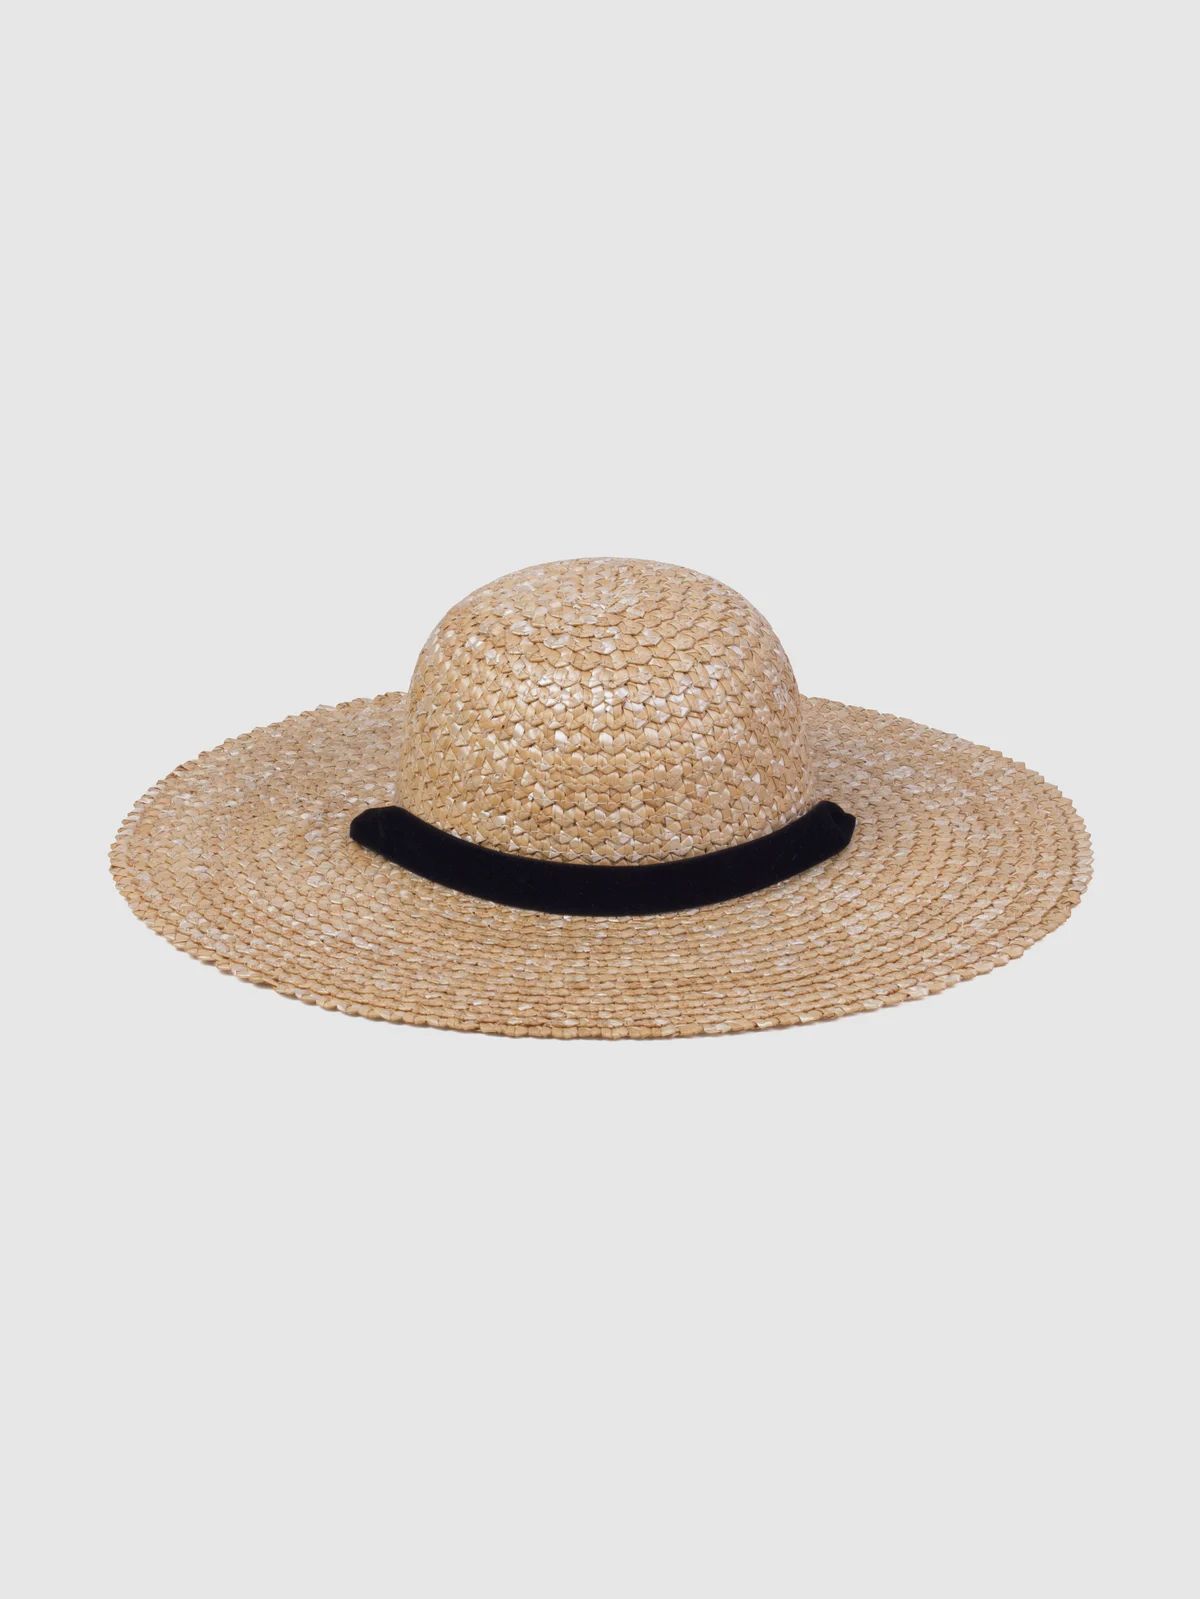 Dolce Sun Hat | Verishop